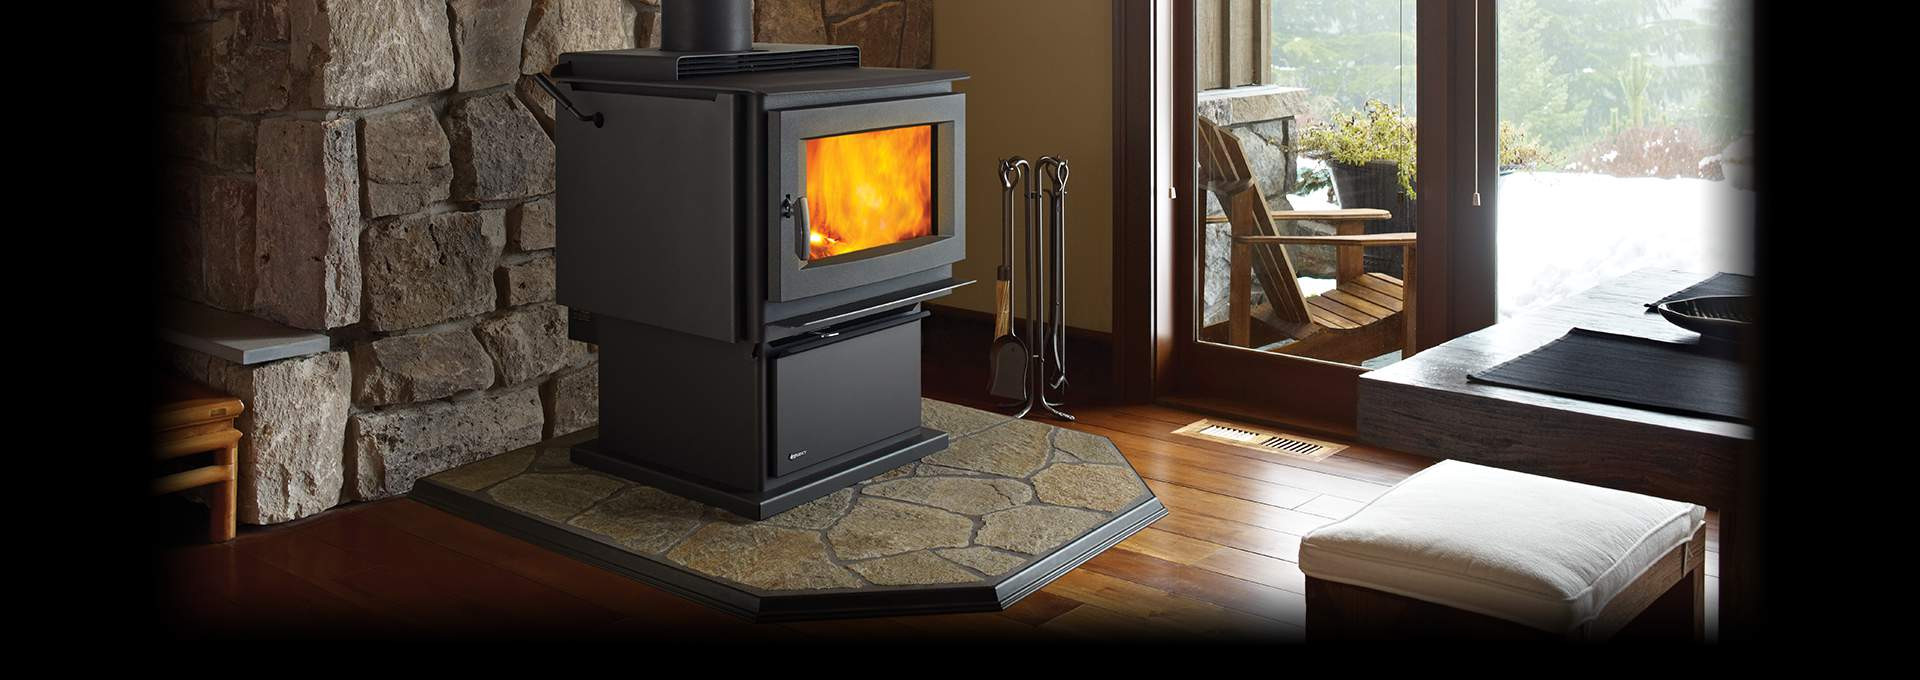 Fireplace Website Fresh 26 Re Mended Hardwood Floor Fireplace Transition